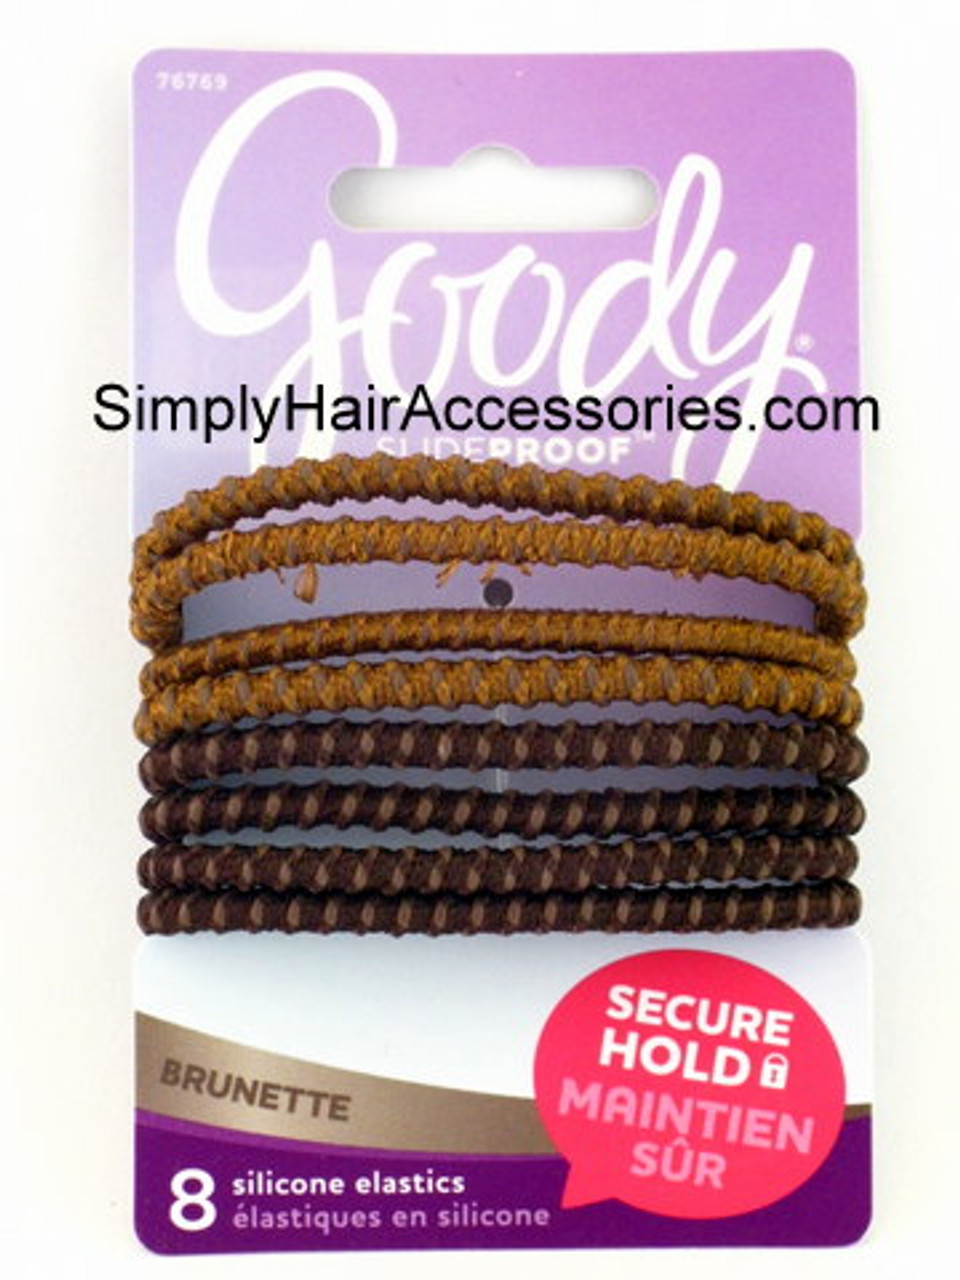 Goody Slideproof Brunette Silicone Hair Elastics - 8 Pcs. - Click Image to Close